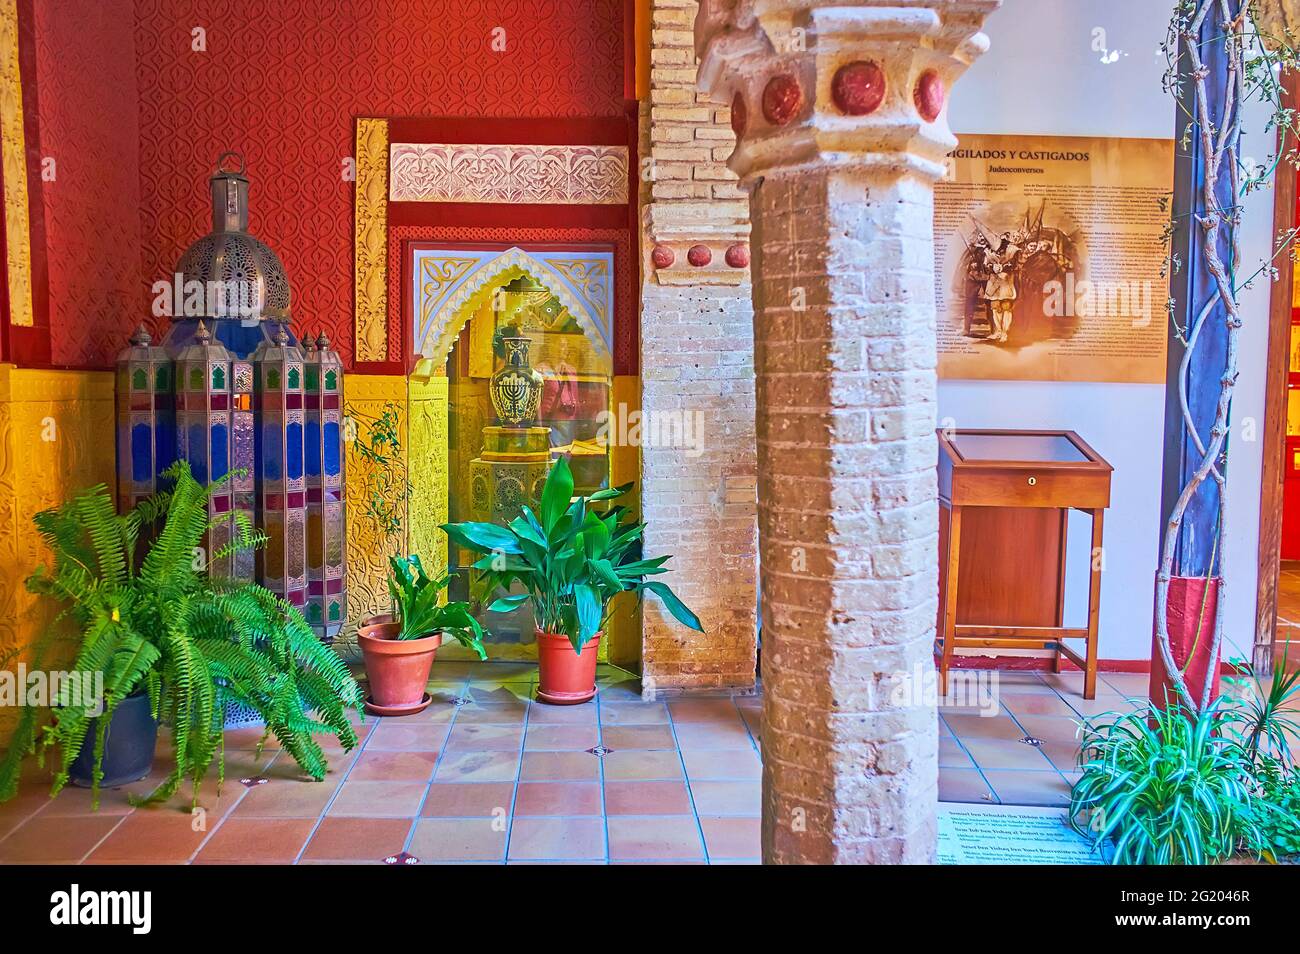 CORDOBA, SPAIN - SEPTEMBER 30, 2019: The richly decorated walls, old brick columns and plants in pots in Casa de Sefarad, Juderia (Jewish Quarter), on Stock Photo